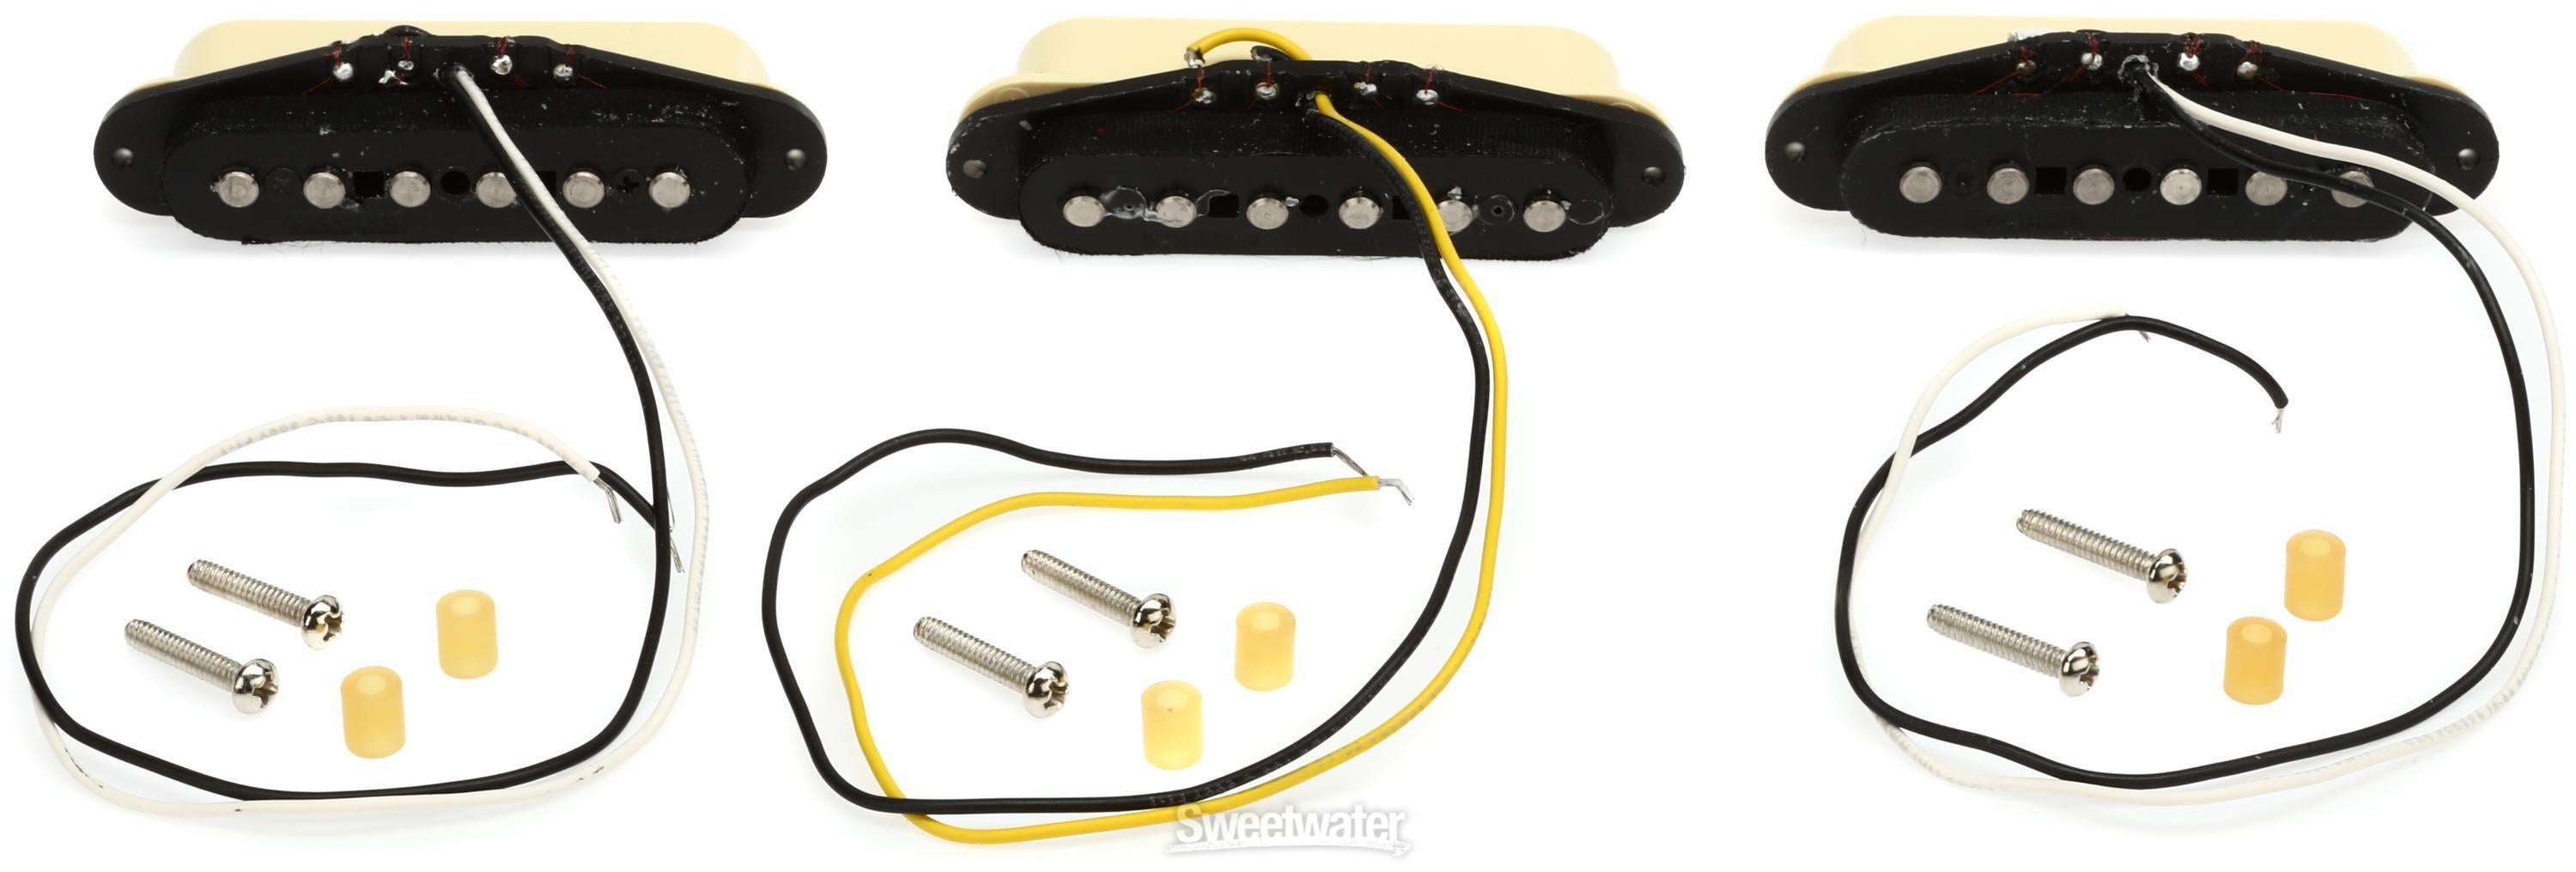 Fender Hot Noiseless Strat Single Coil 3-piece Pickup Set | Sweetwater